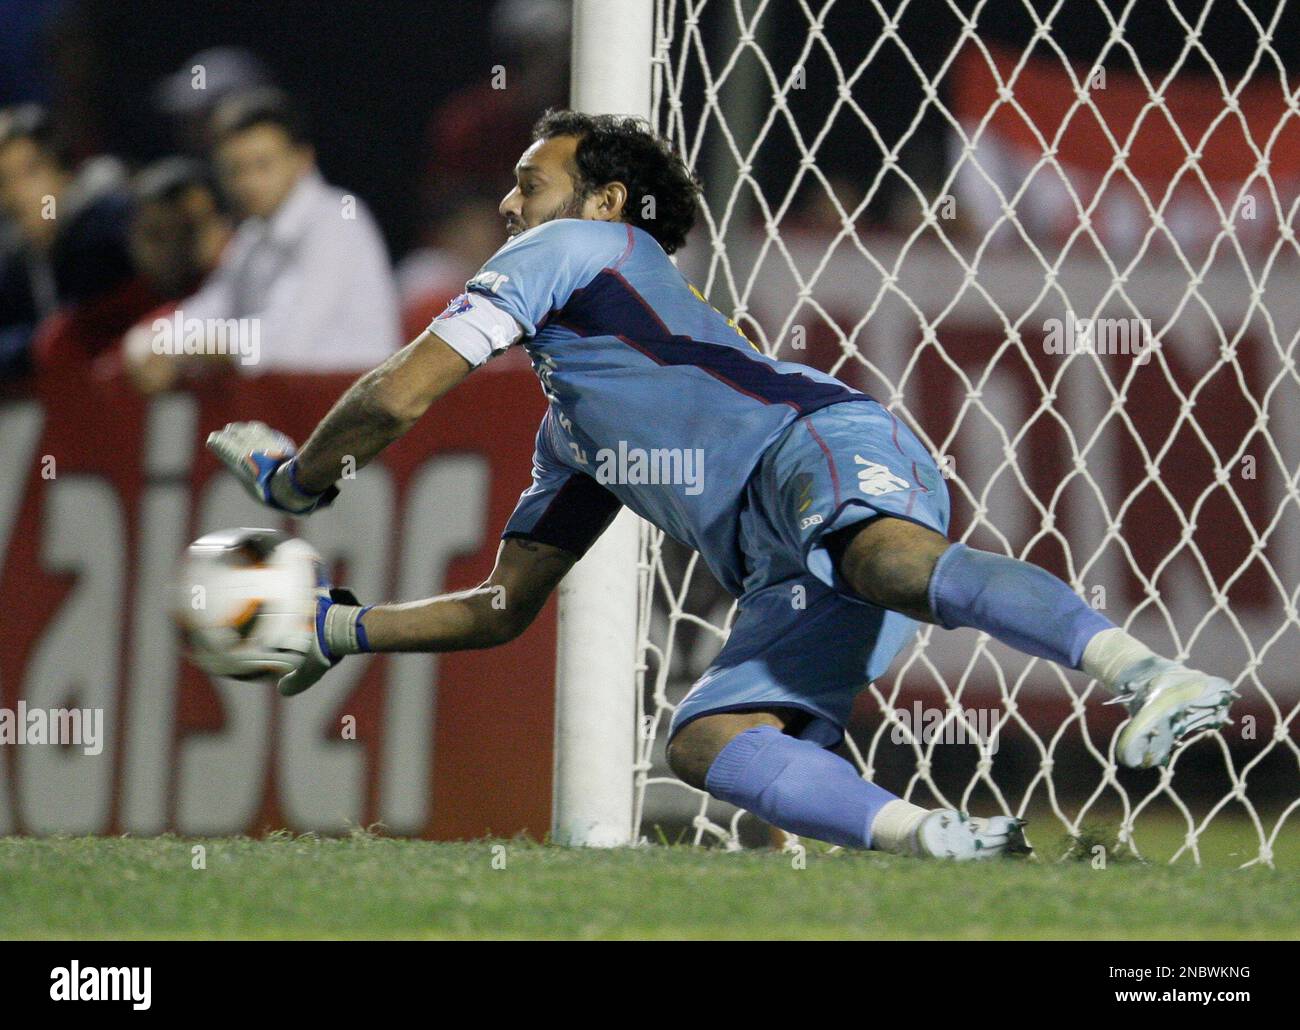 Cerro Porteño  The Paraguay Football Blog